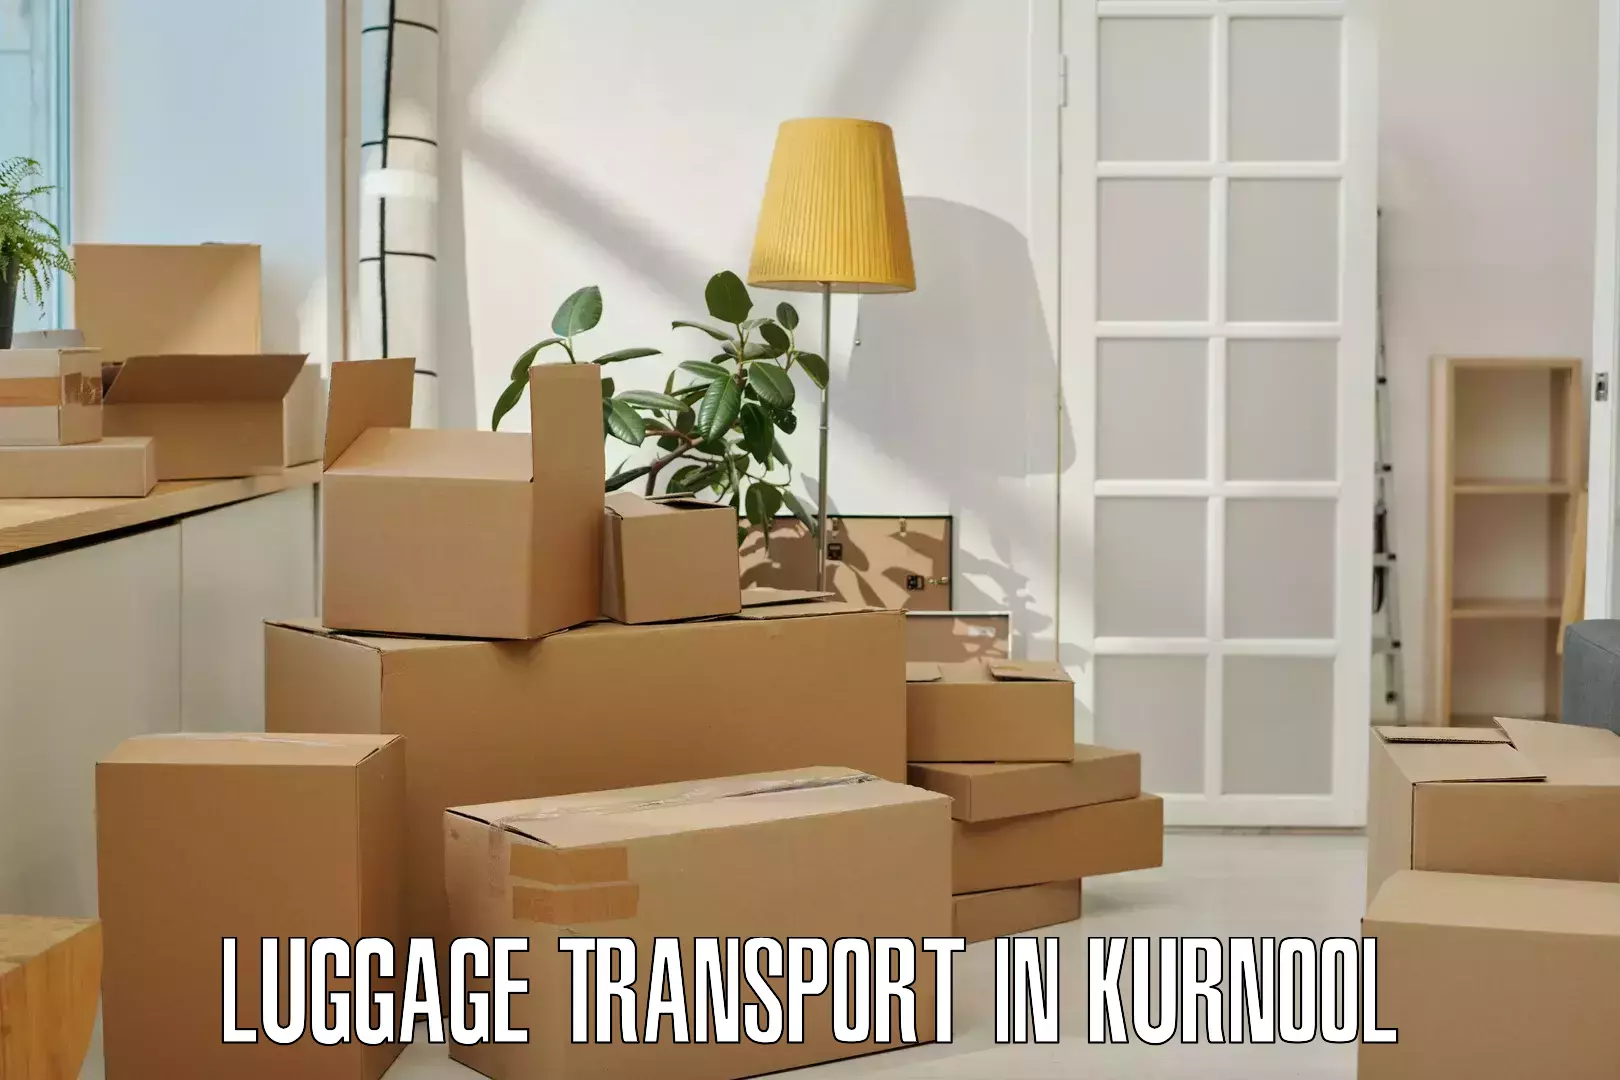 Doorstep luggage collection in Kurnool